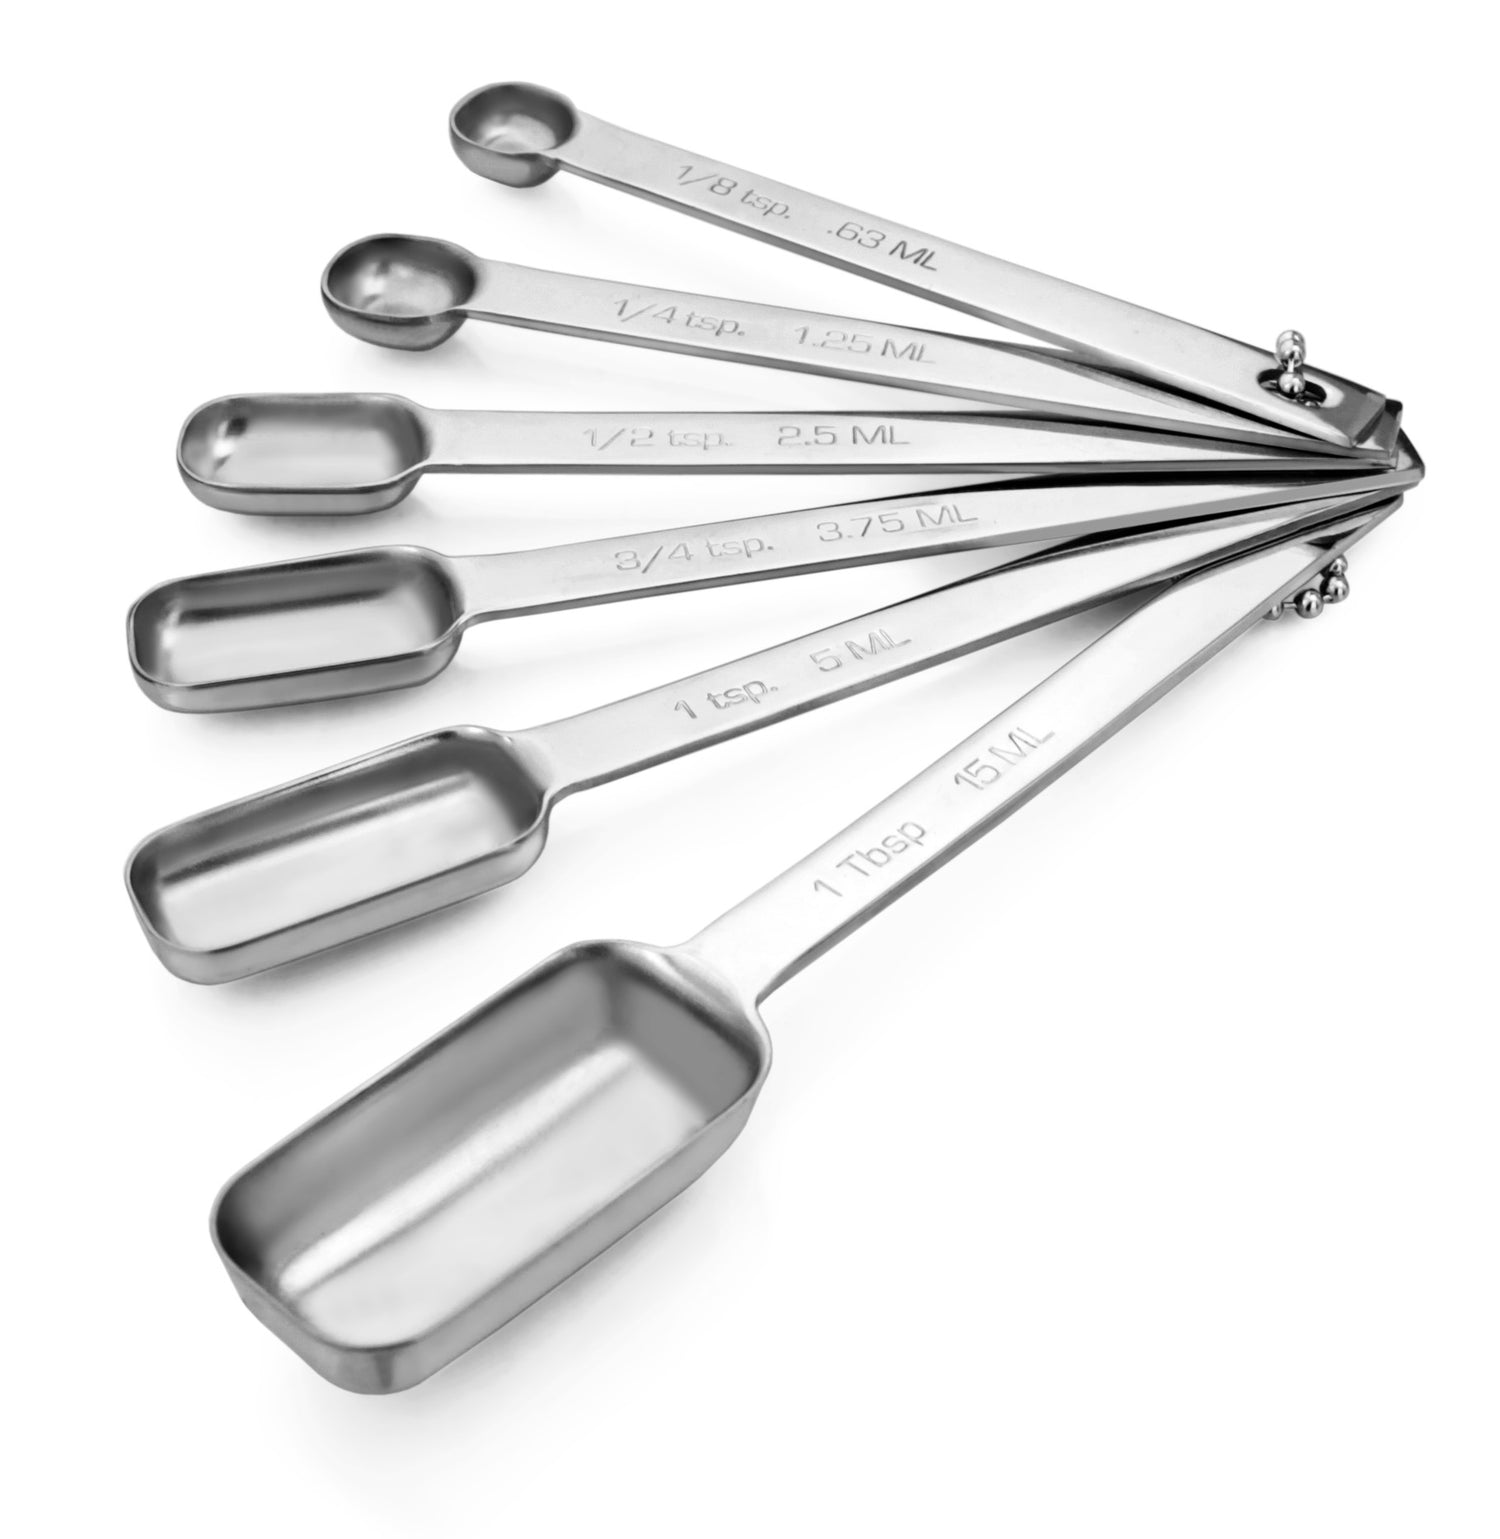 Measuring spoon set - 1/8 tsp to 1 tbsp